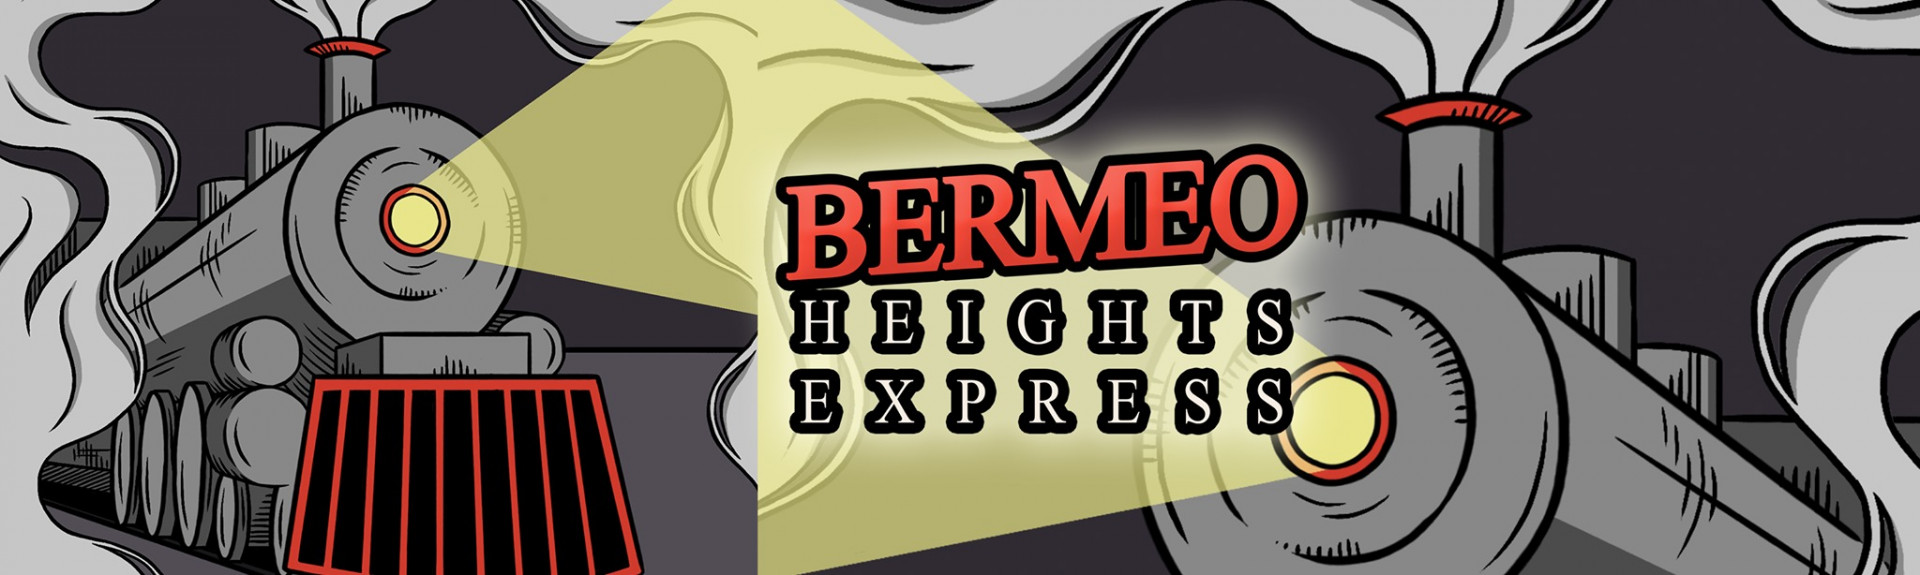 Bermeo Heights Express